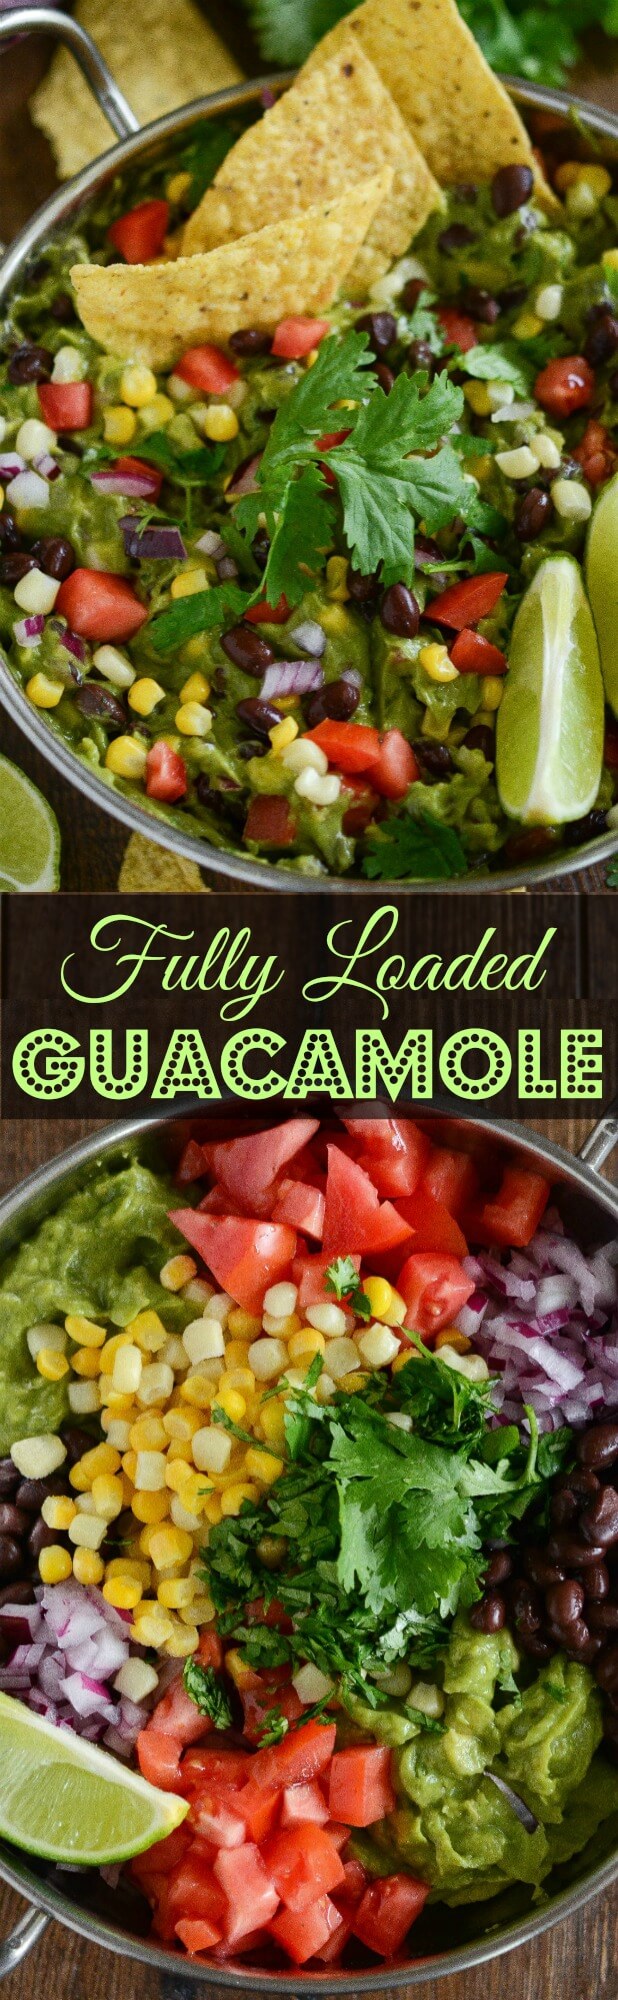 Best Homemade Guacamole Recipe